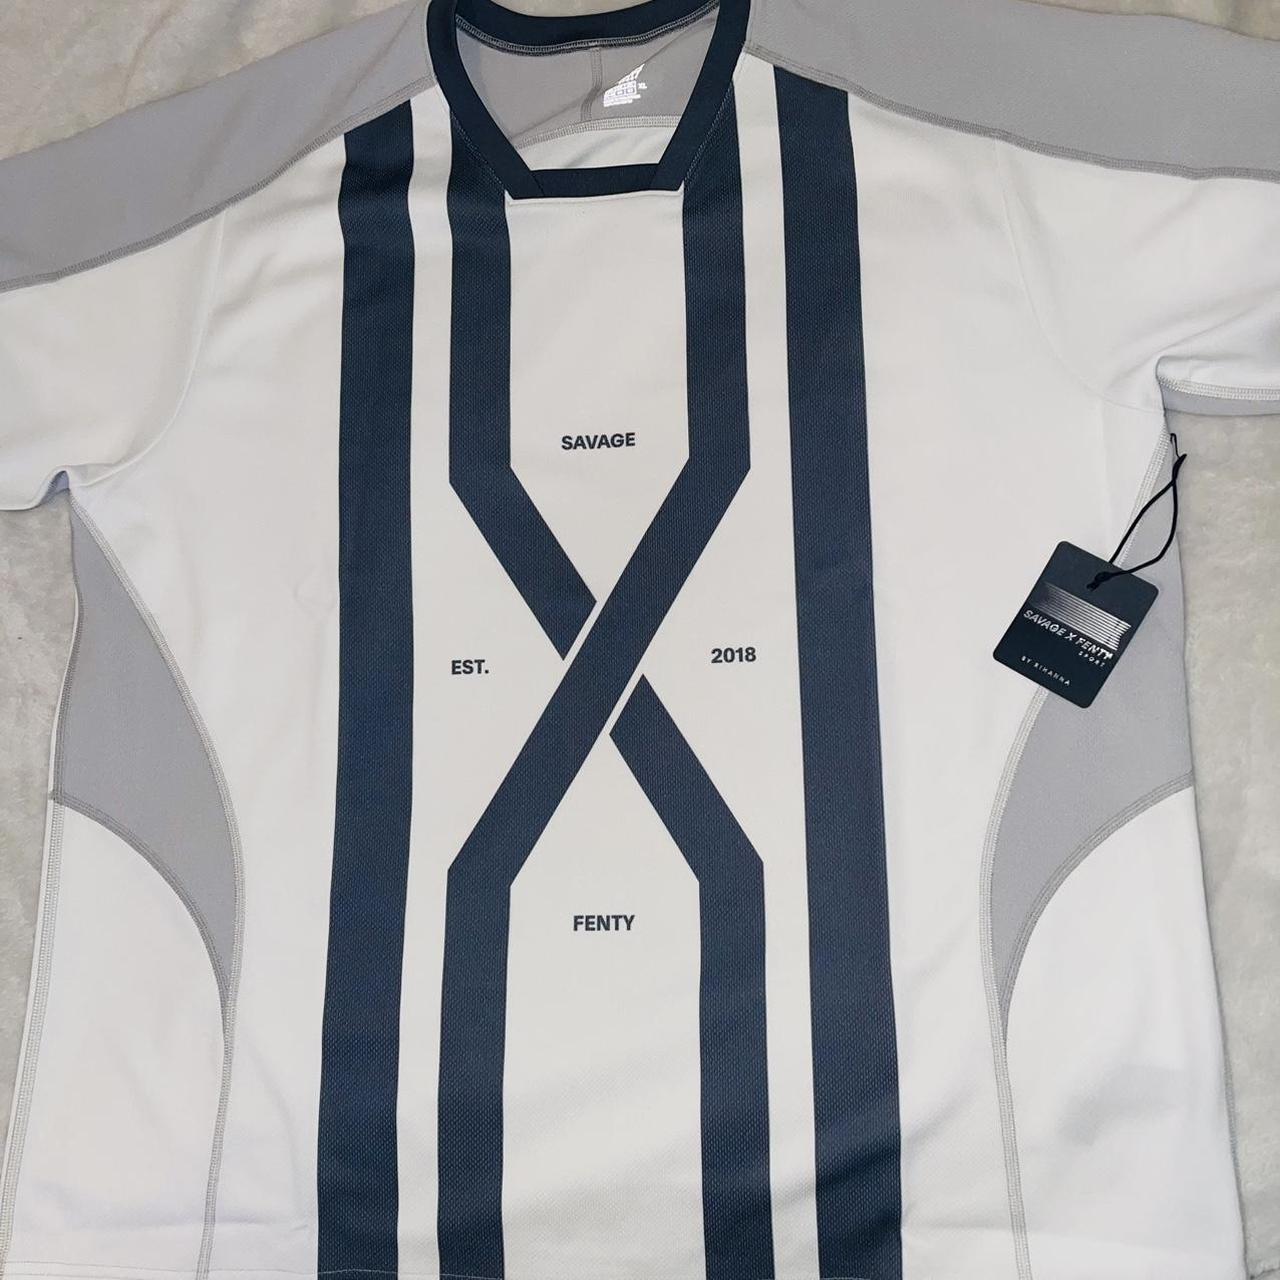 Savage x Fenty - men's jersey top - size xL - Depop